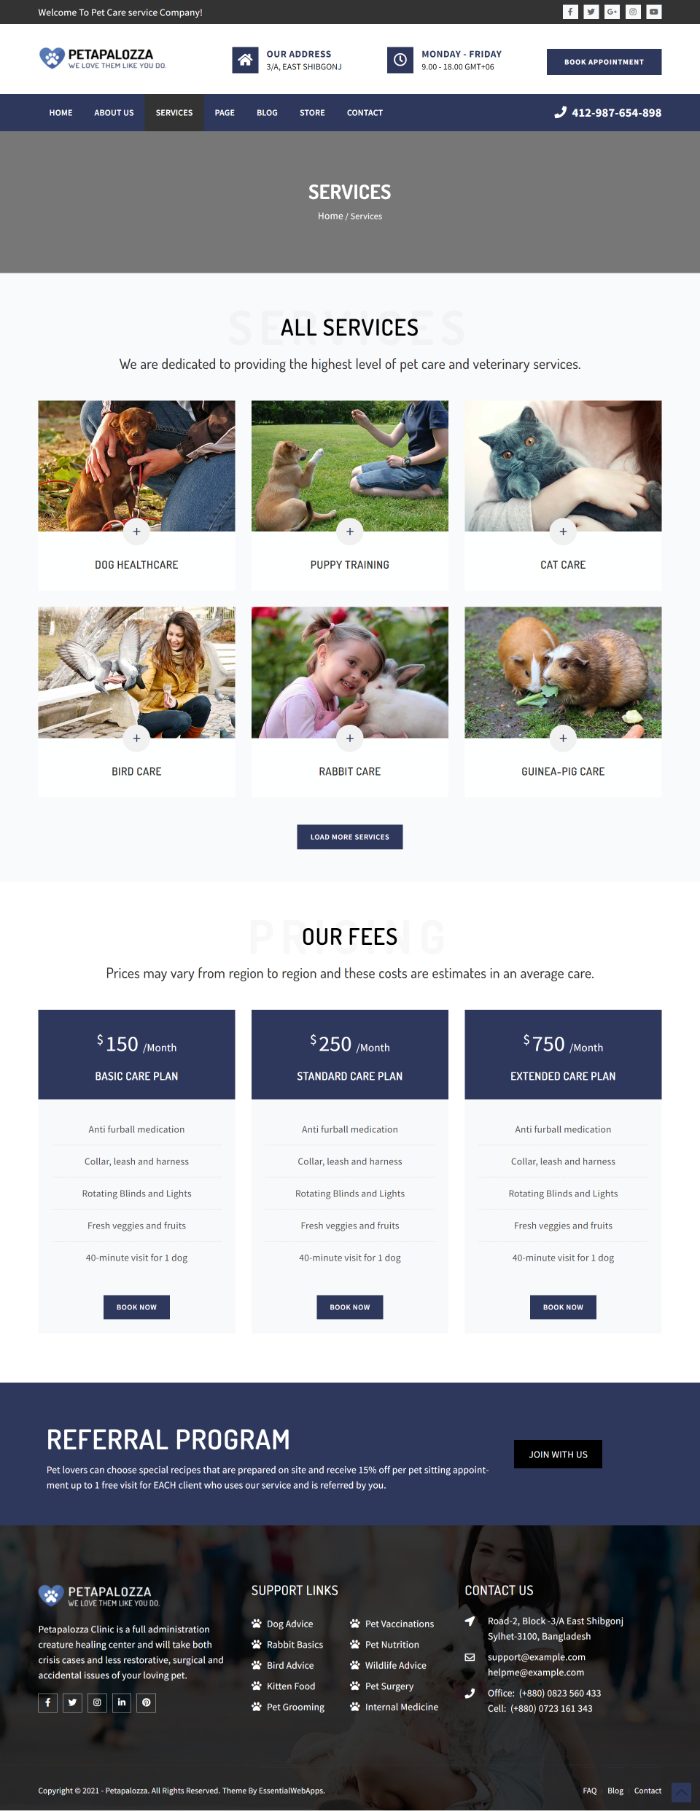 Mẫu website chăm sóc thú cưng - Pet care 10